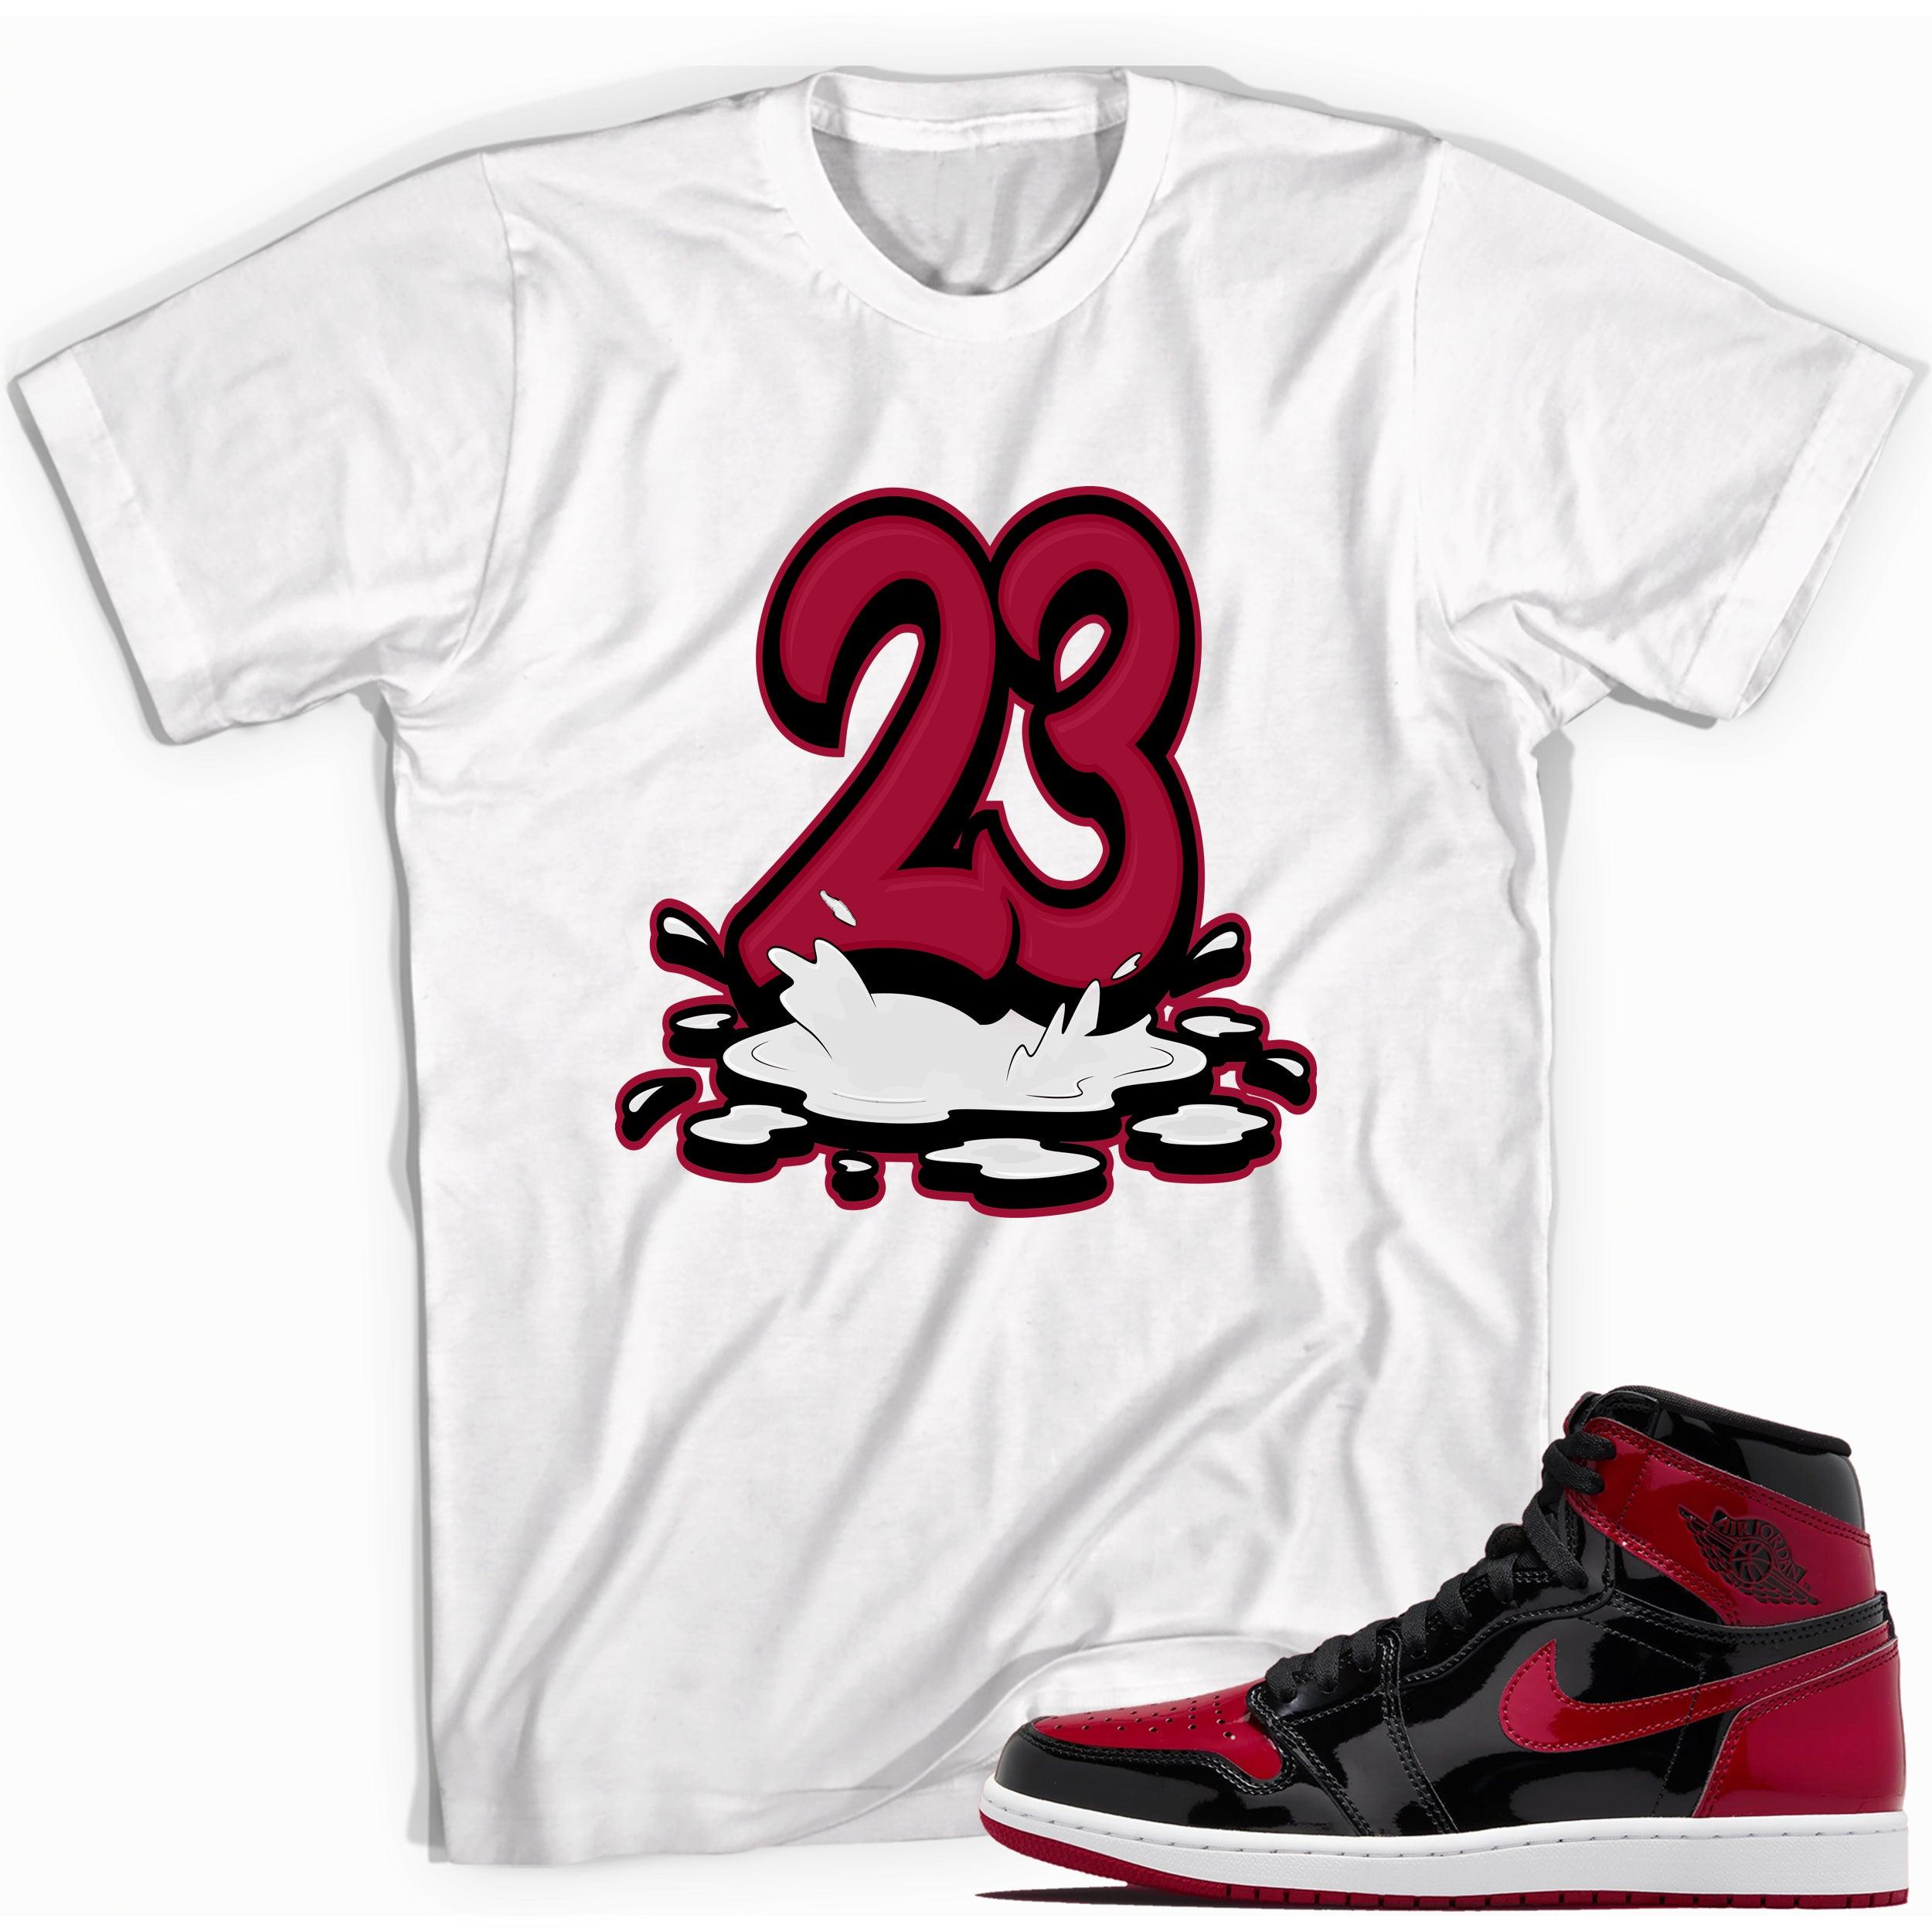 23 Shirt by Dope Star Clothing® for Jordan 1s Retro photo